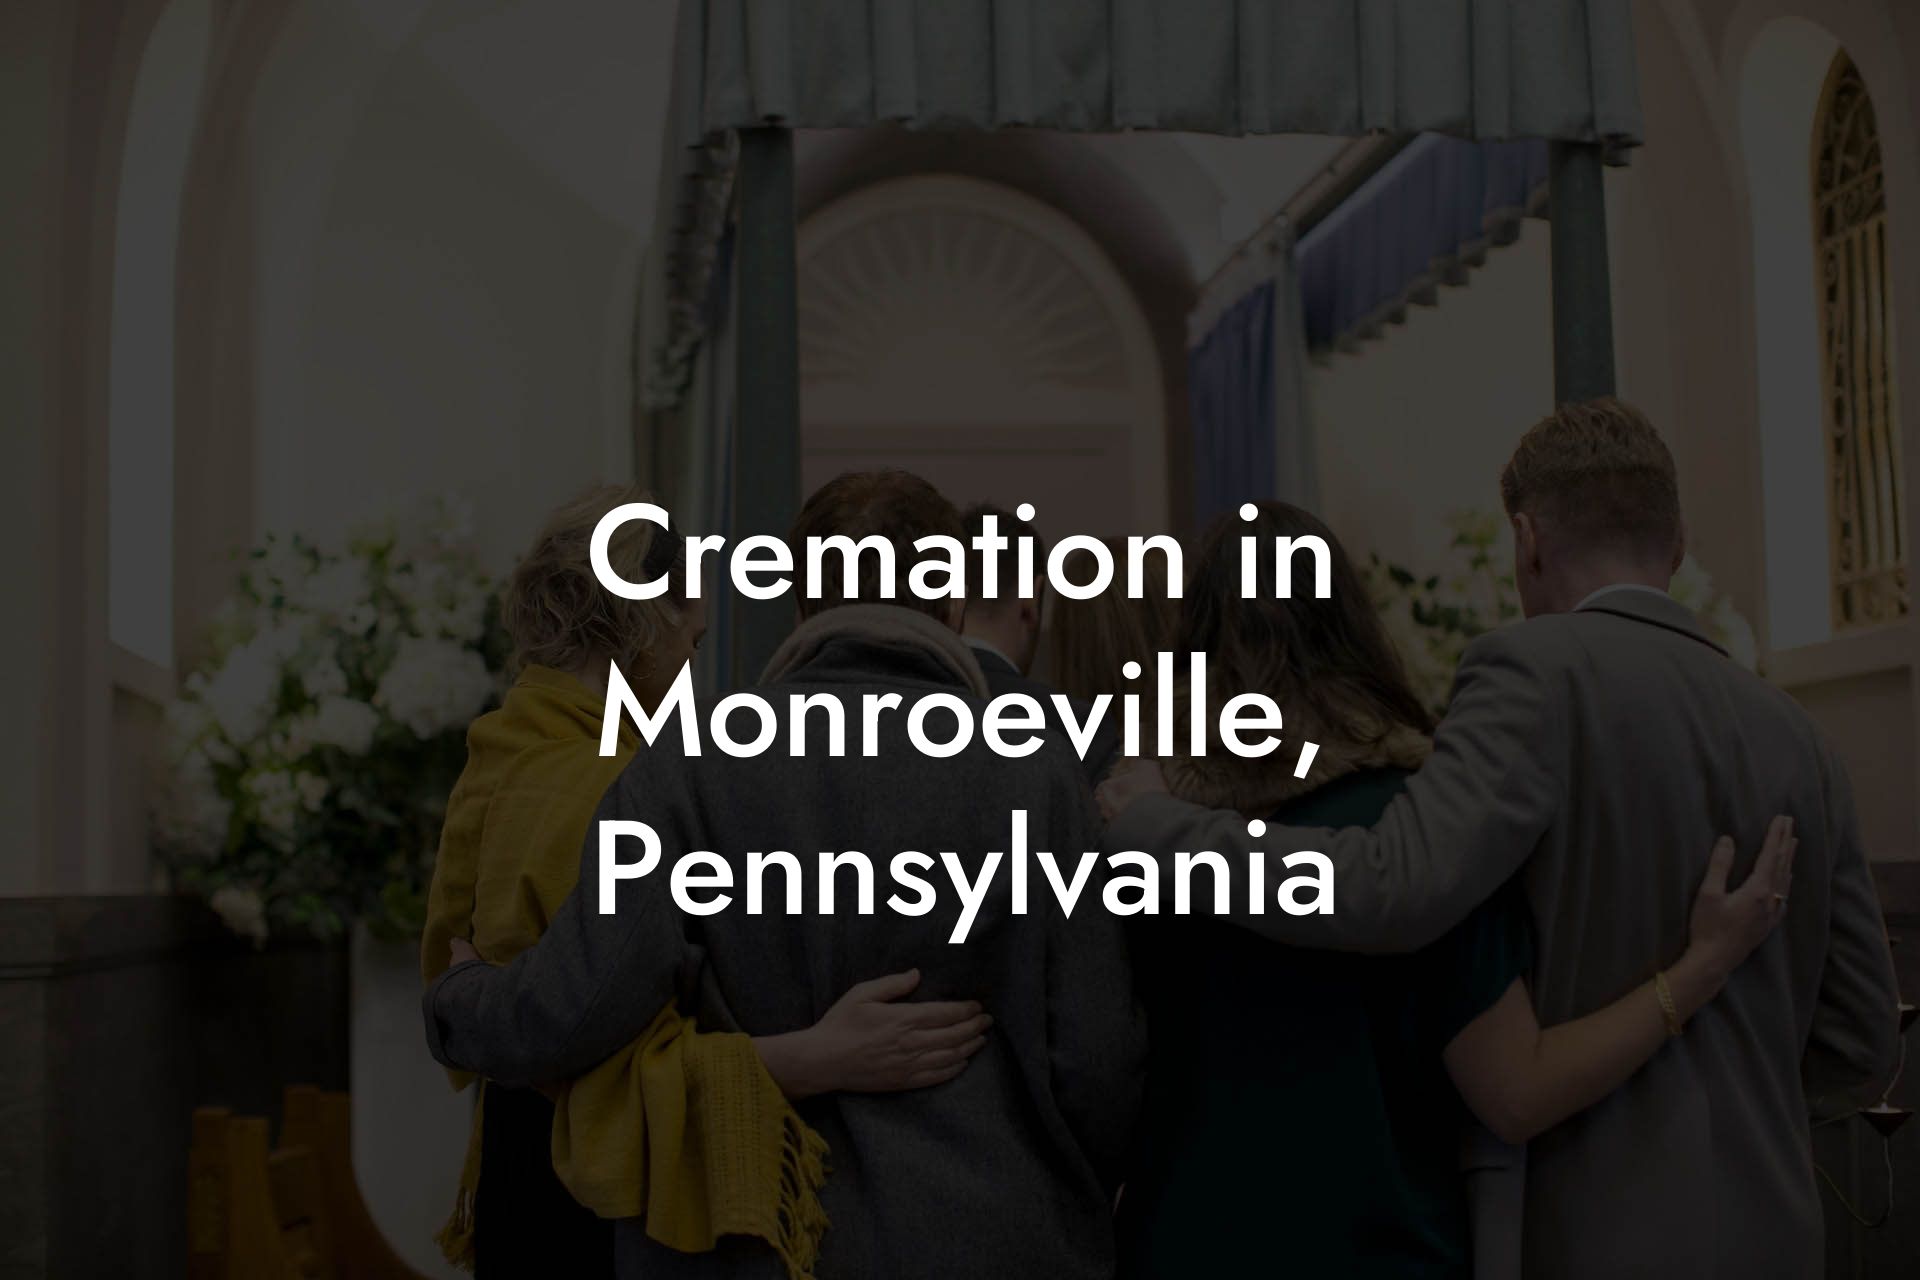 Cremation in Monroeville, Pennsylvania